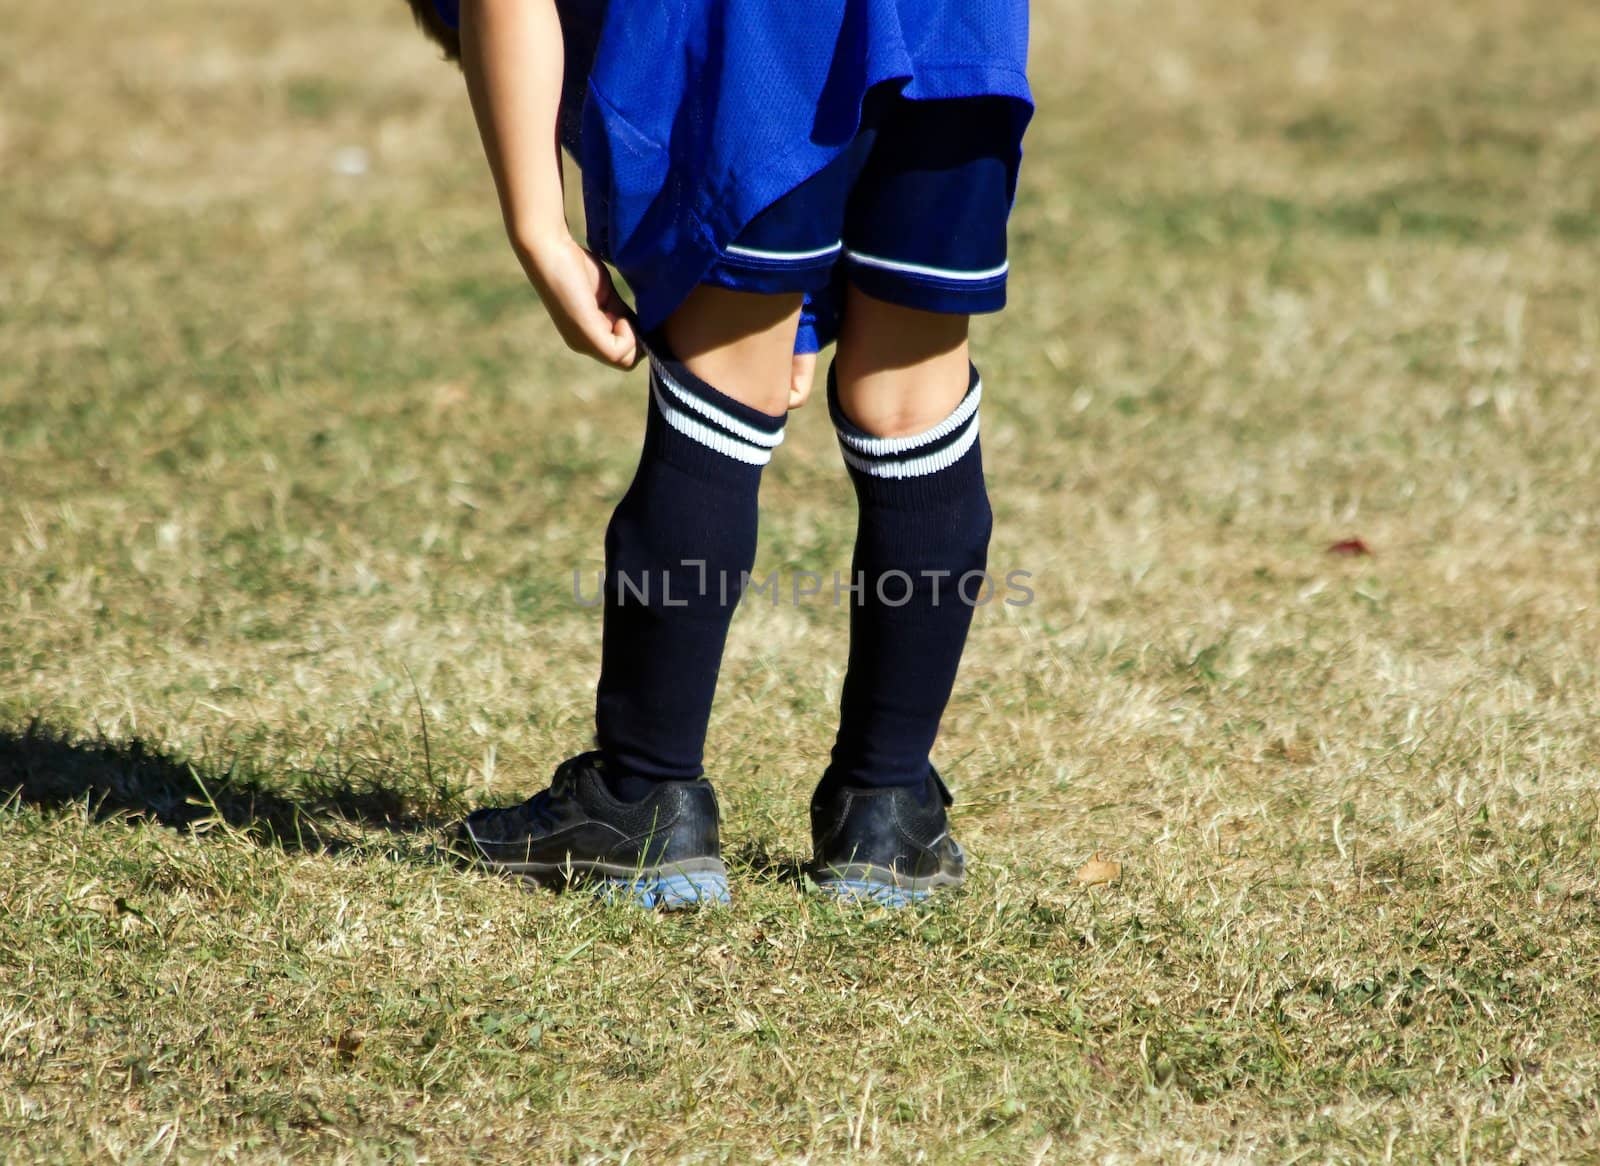 Child football player, implementation of its socks by neko92vl